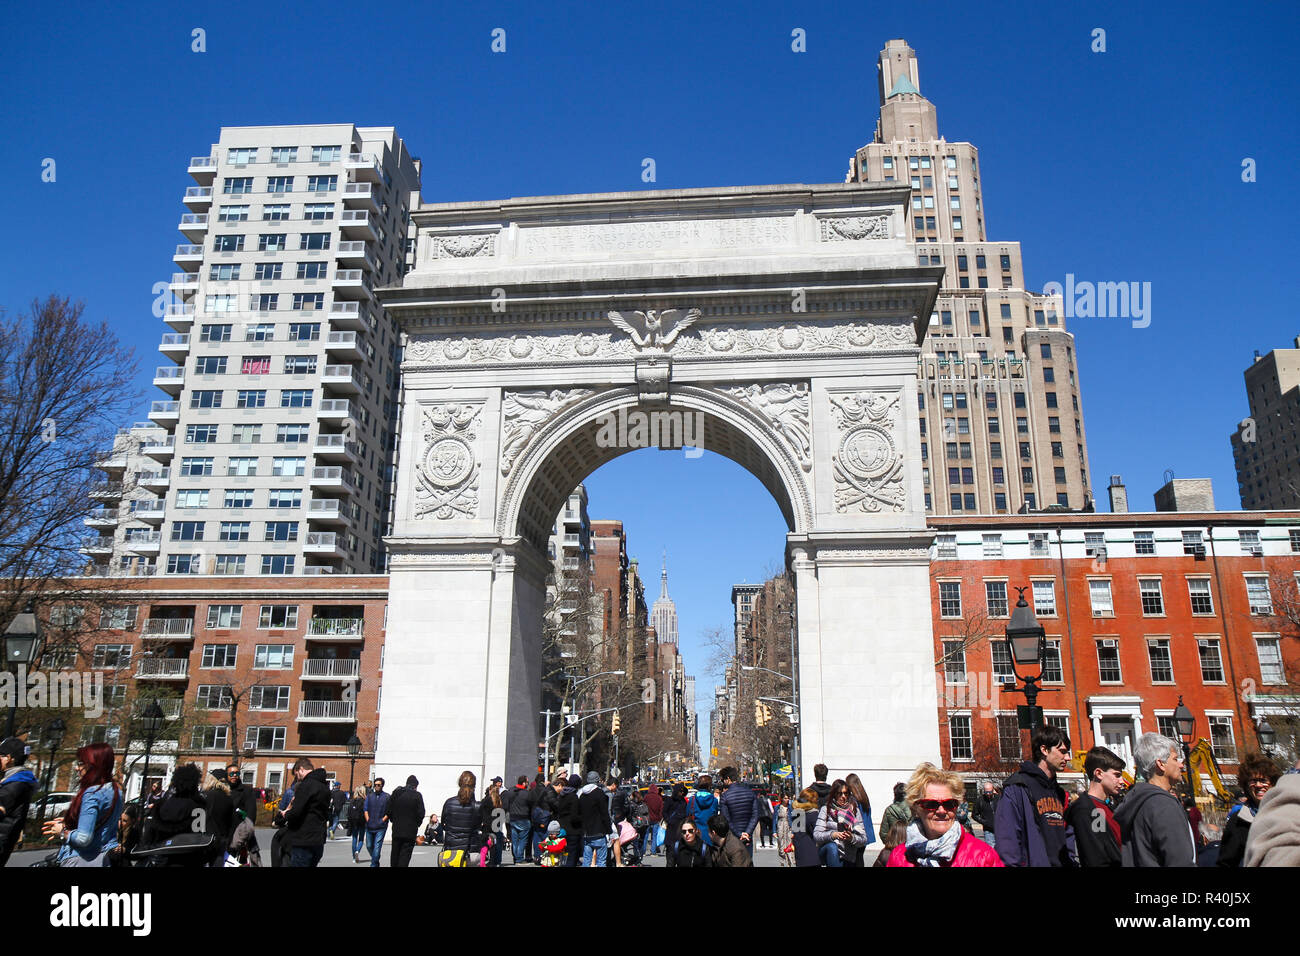 Washington Square Arch, Washington Square Park, Greenwich Village, New York, USA Banque D'Images